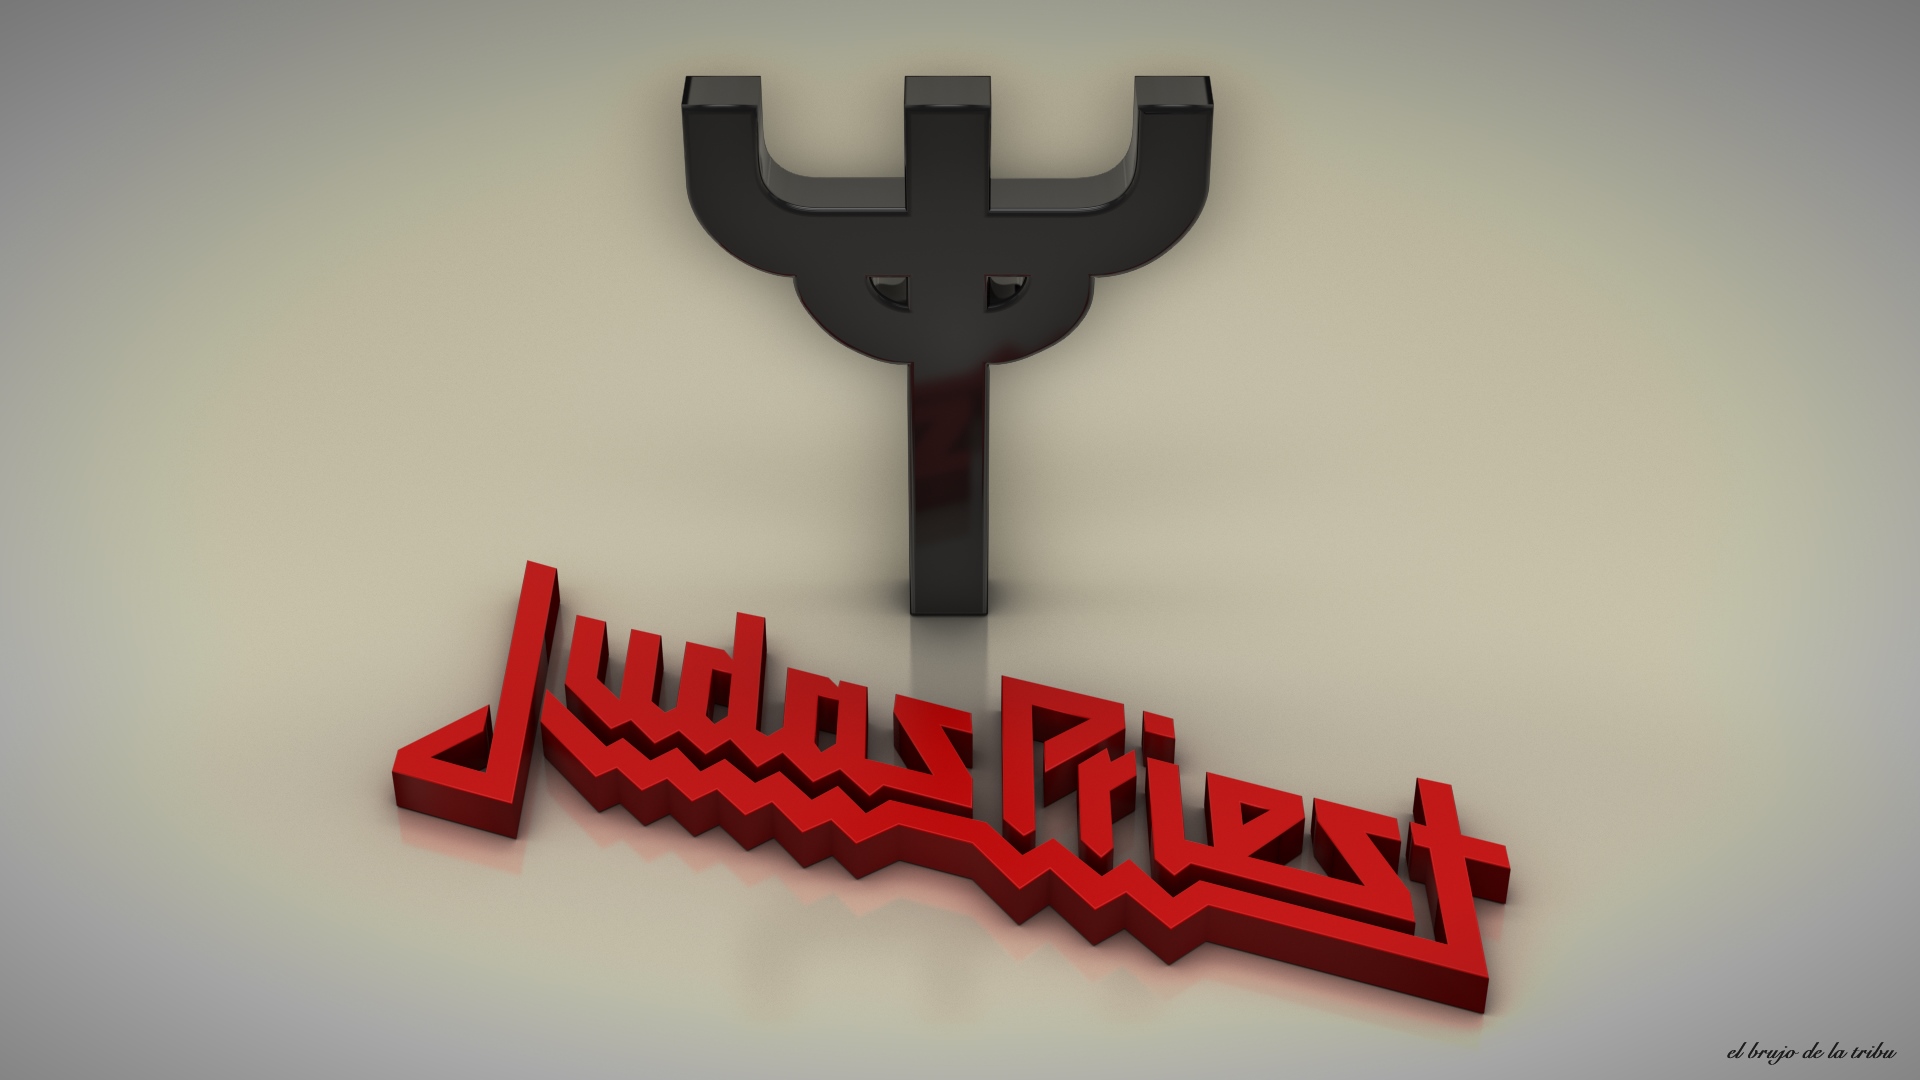 Judas Priest Logo by elbrujodelatribu on DeviantArt